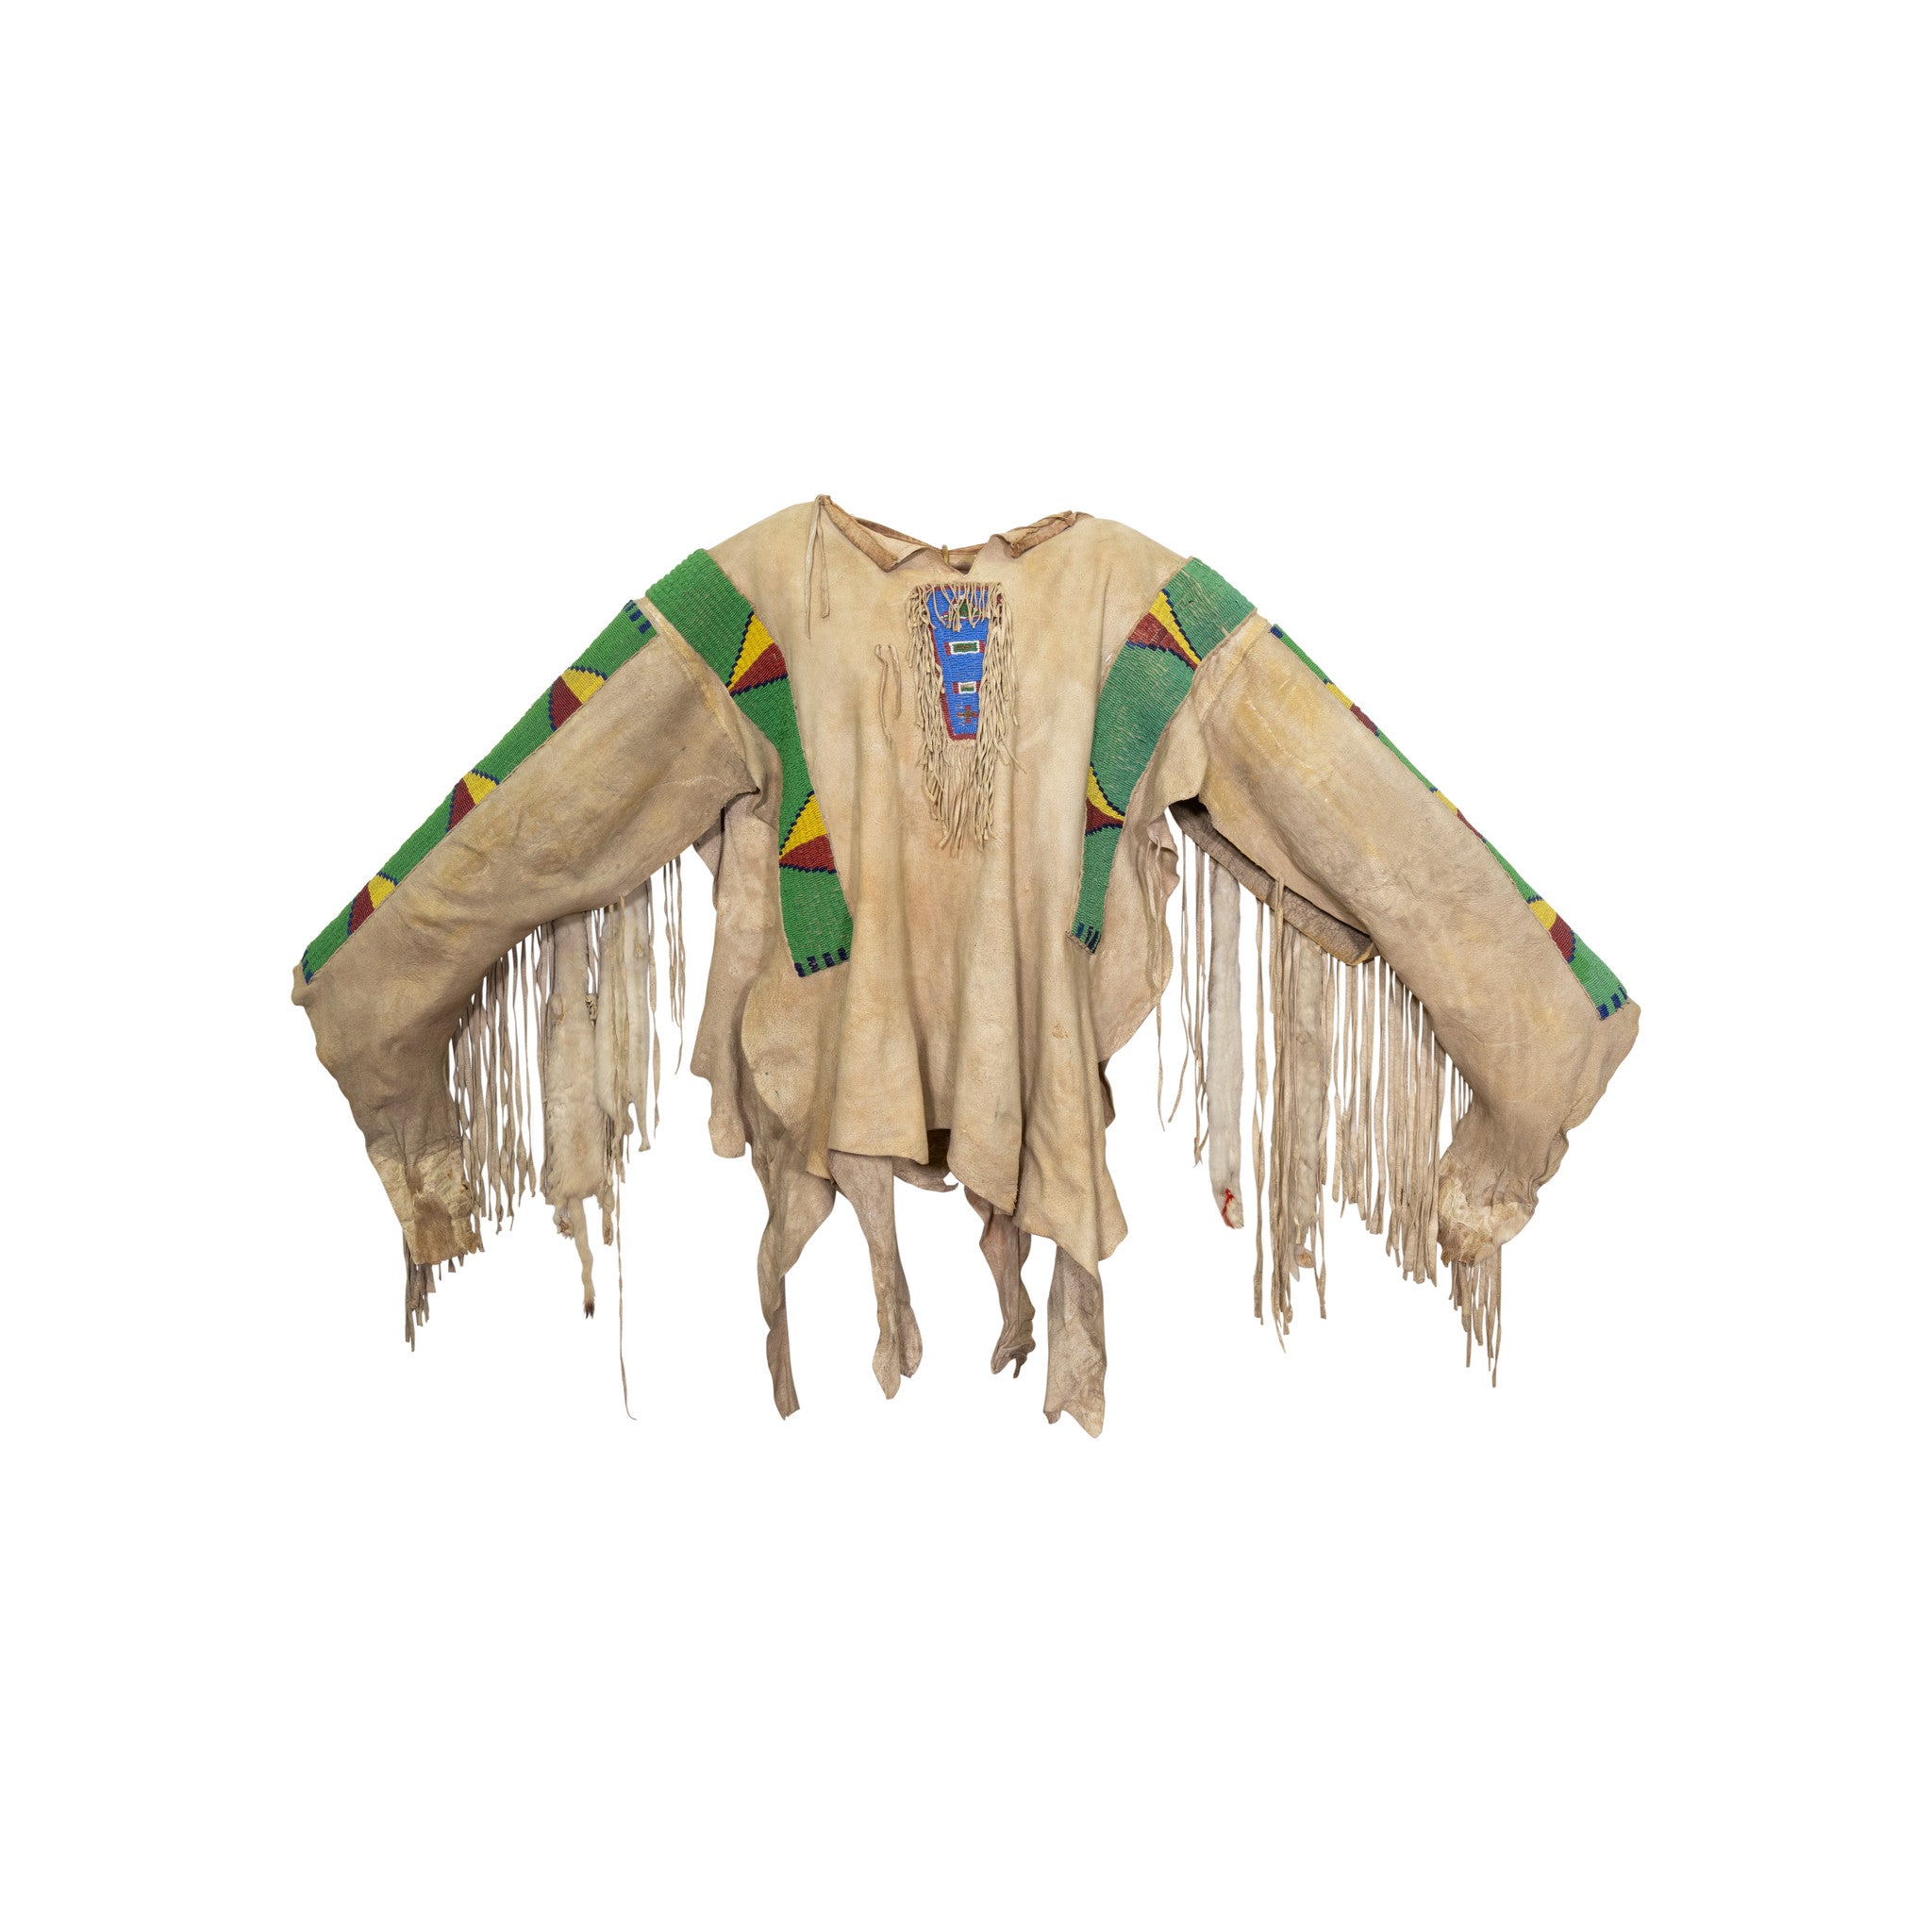 Sioux Warrior's Deer Skin Shirt and Leggings